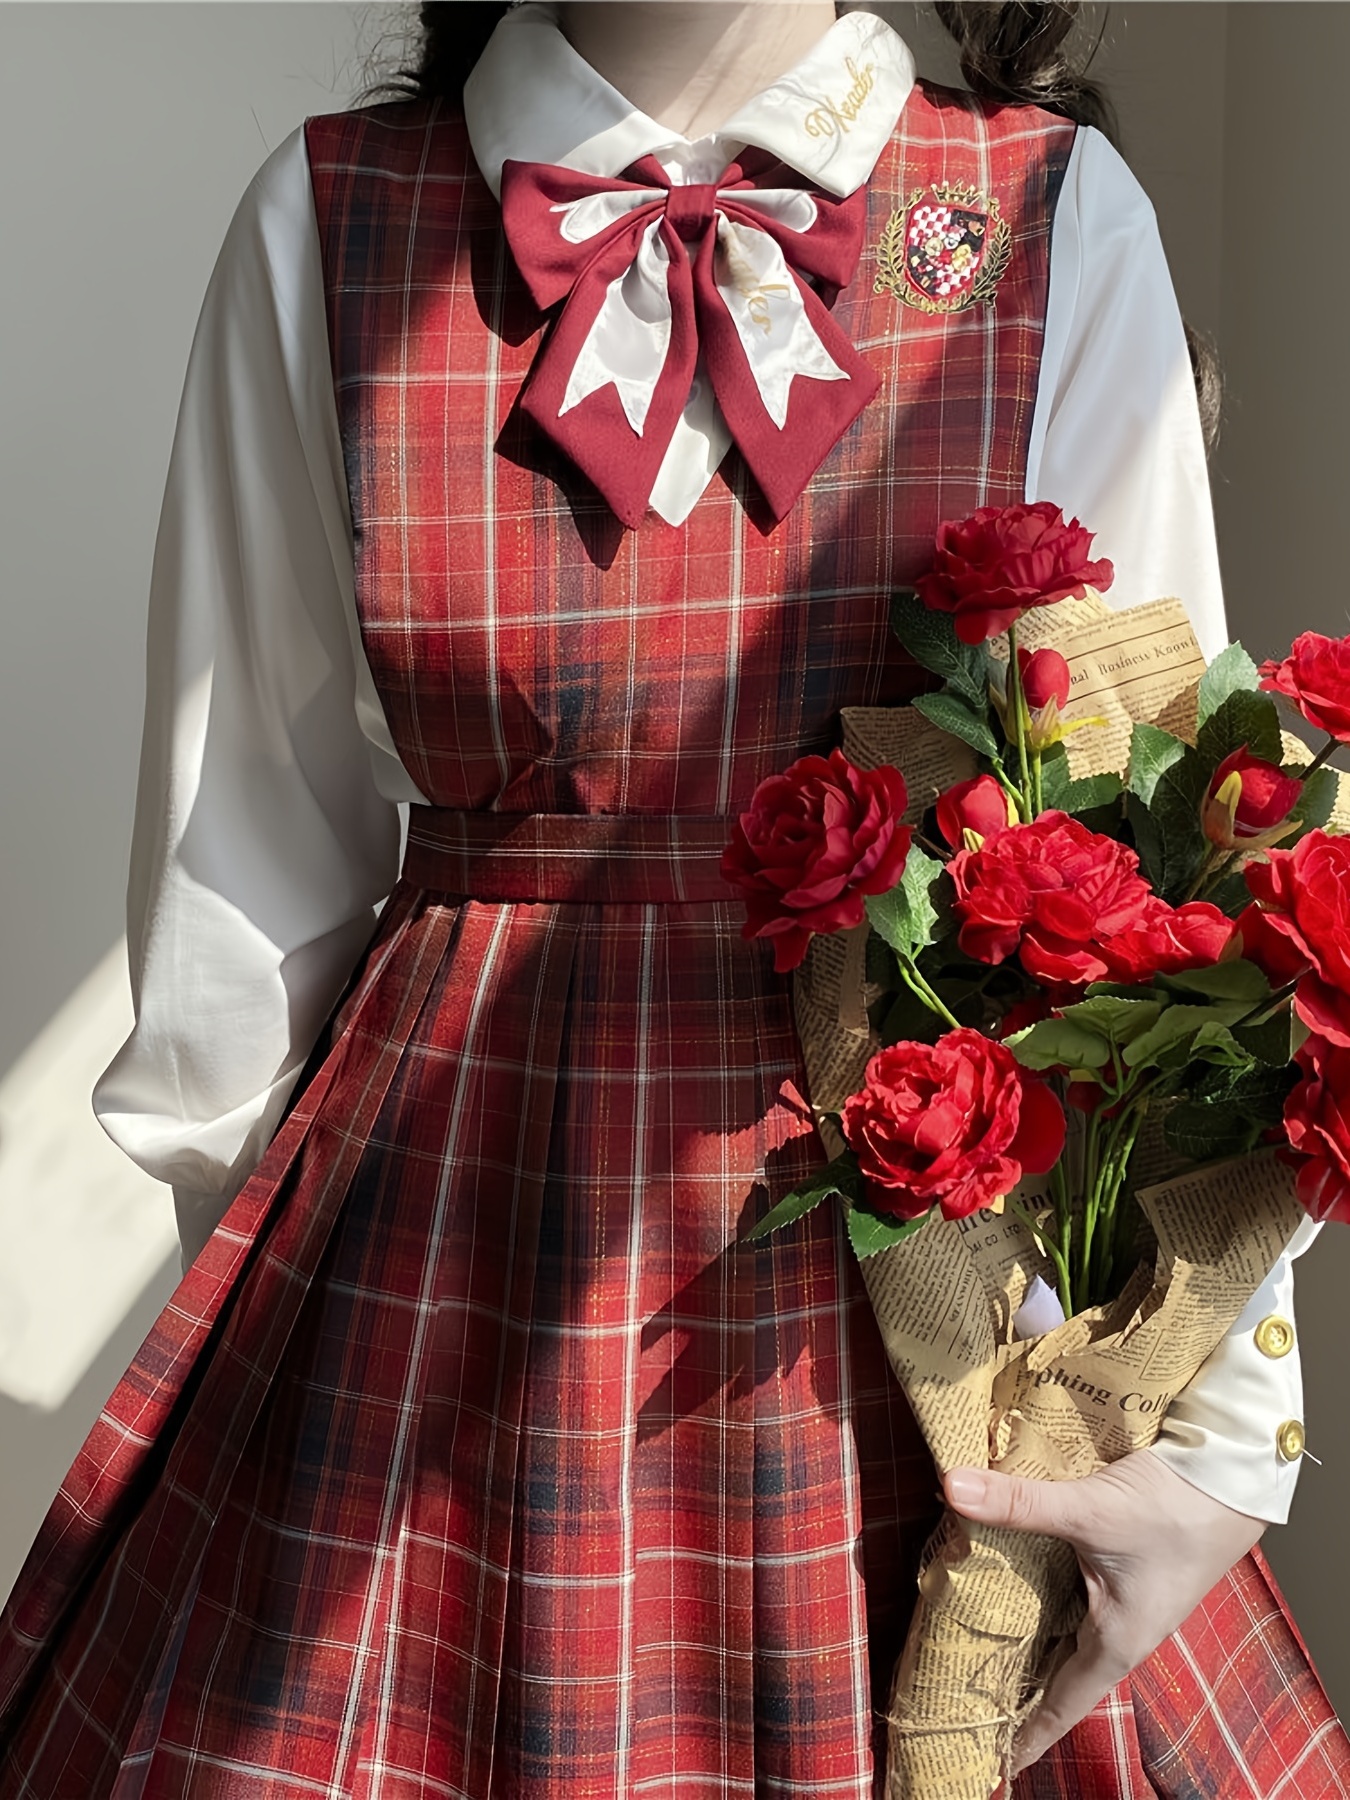 MLLM Japanese Anime Cosplay Costume,Jk Uniform Pure Plaid Pleated Skirt  Student School Uniform Japanese College Style Suit,Short Sleeve Suit (40) +  Bow Tie,XXS Weight 30-35kg : Amazon.co.uk: Fashion